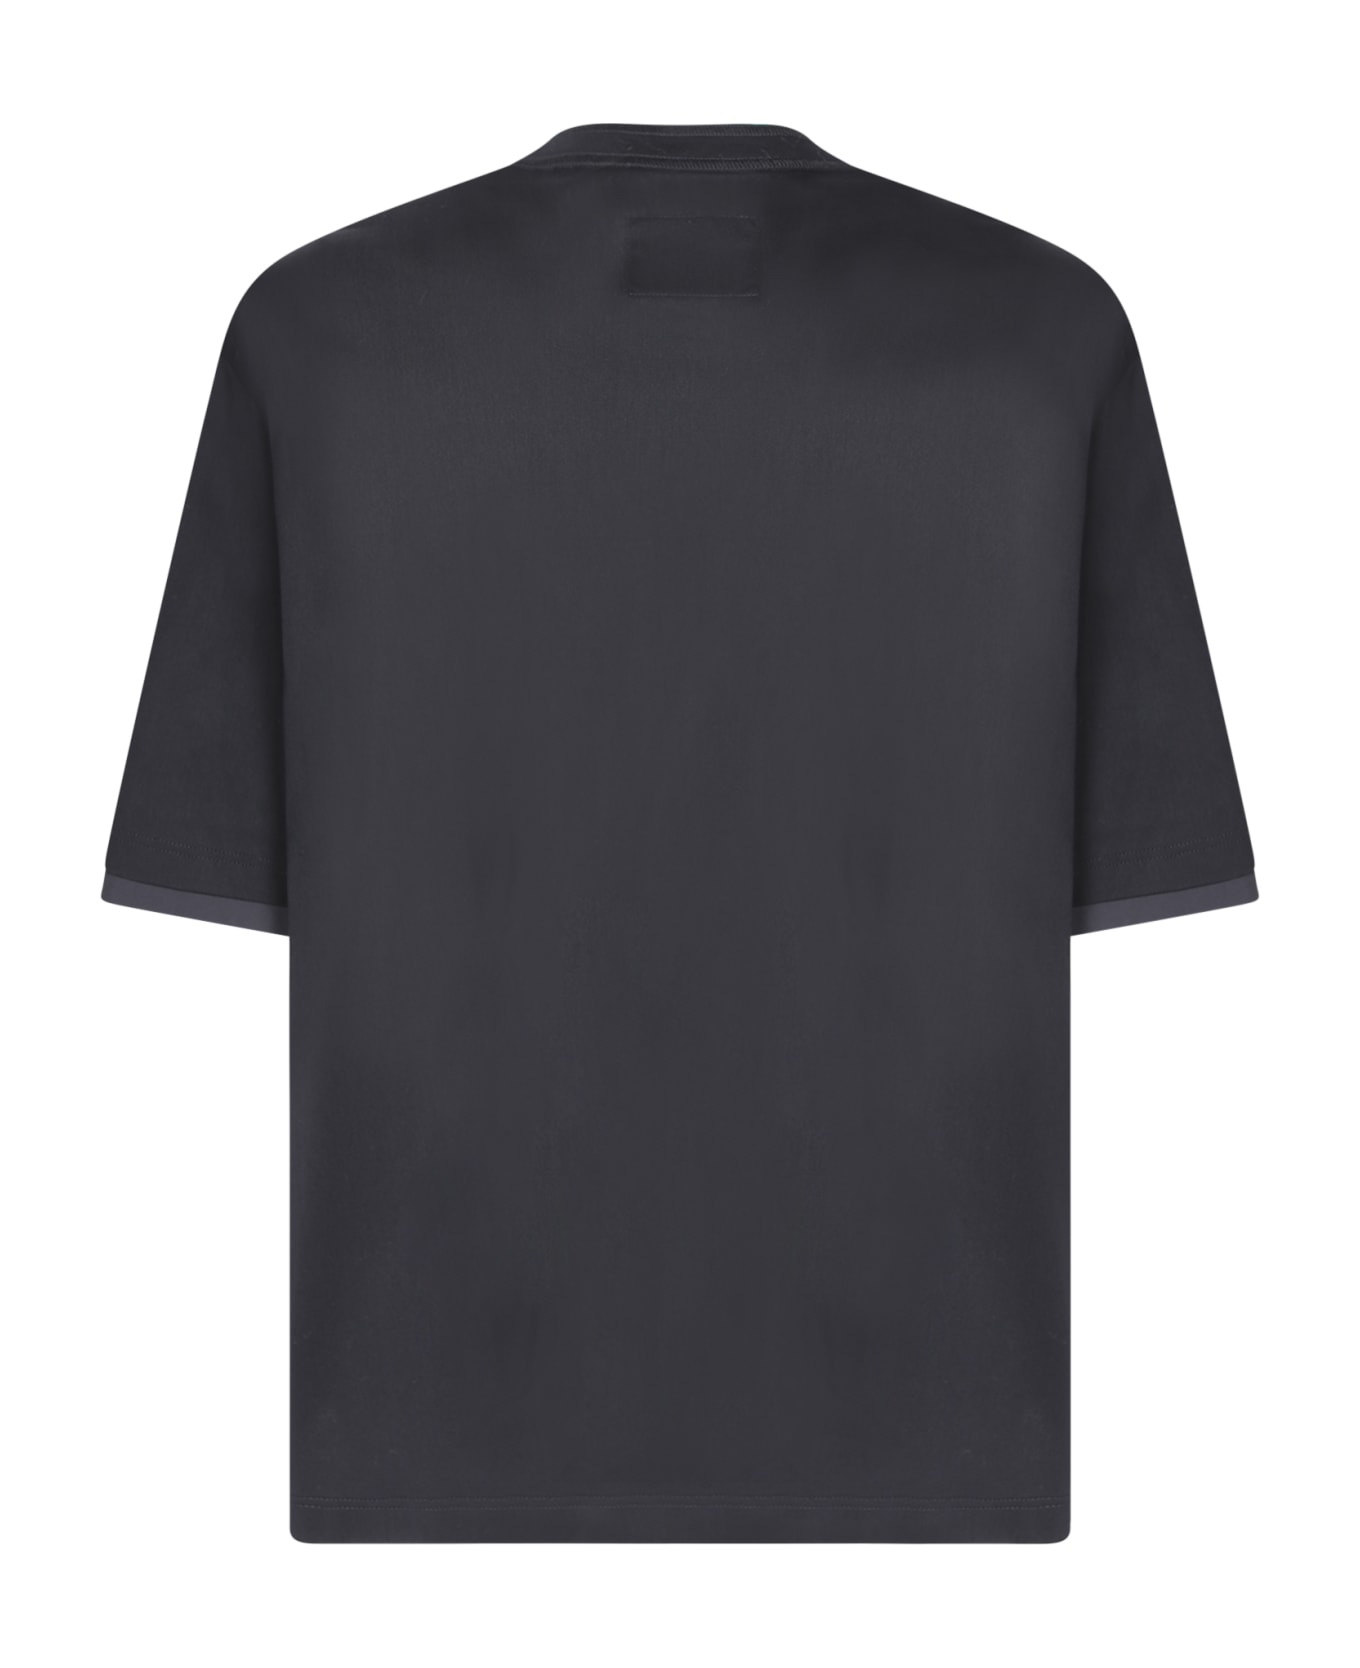 Sacai Black Zip Pocket T-shirt - Black